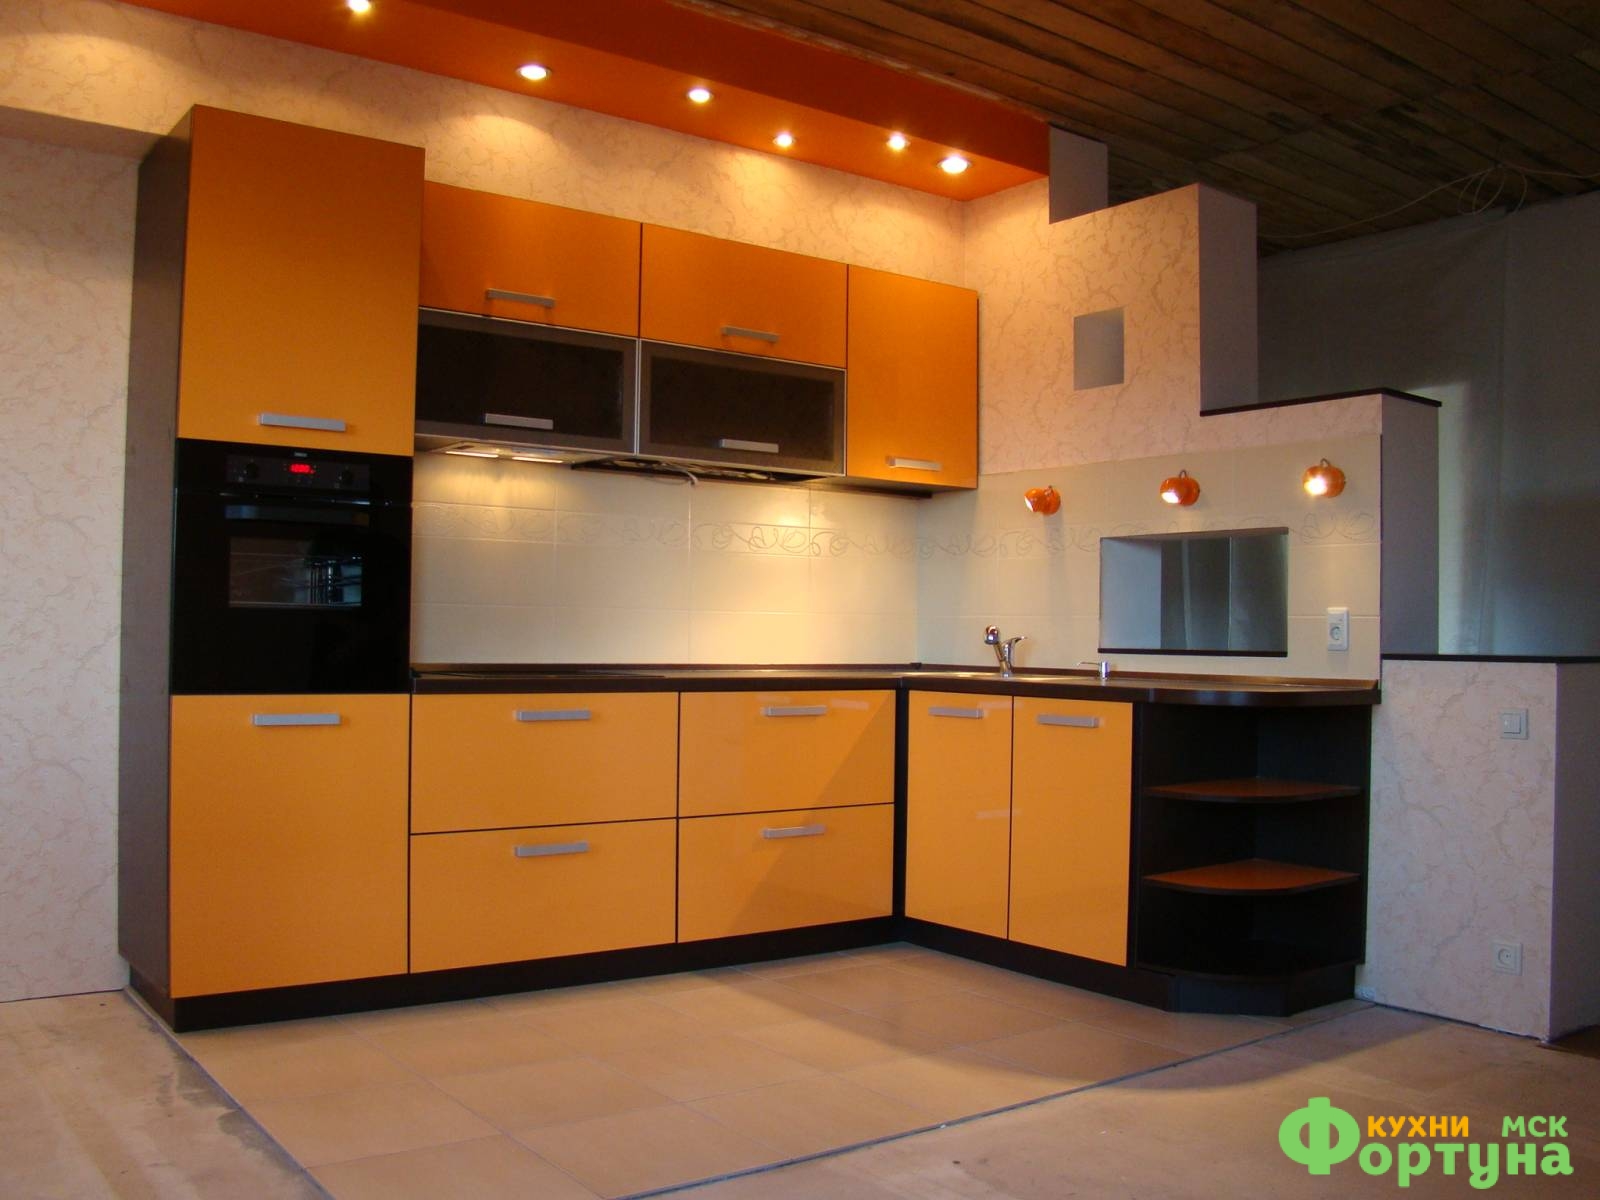 Материалы кухни пластик. Оранжевая кухня. Кухня оранжевый пластиковый. Кухонный гарнитур пластиковый фасад. Кухонные фасады из пластика.